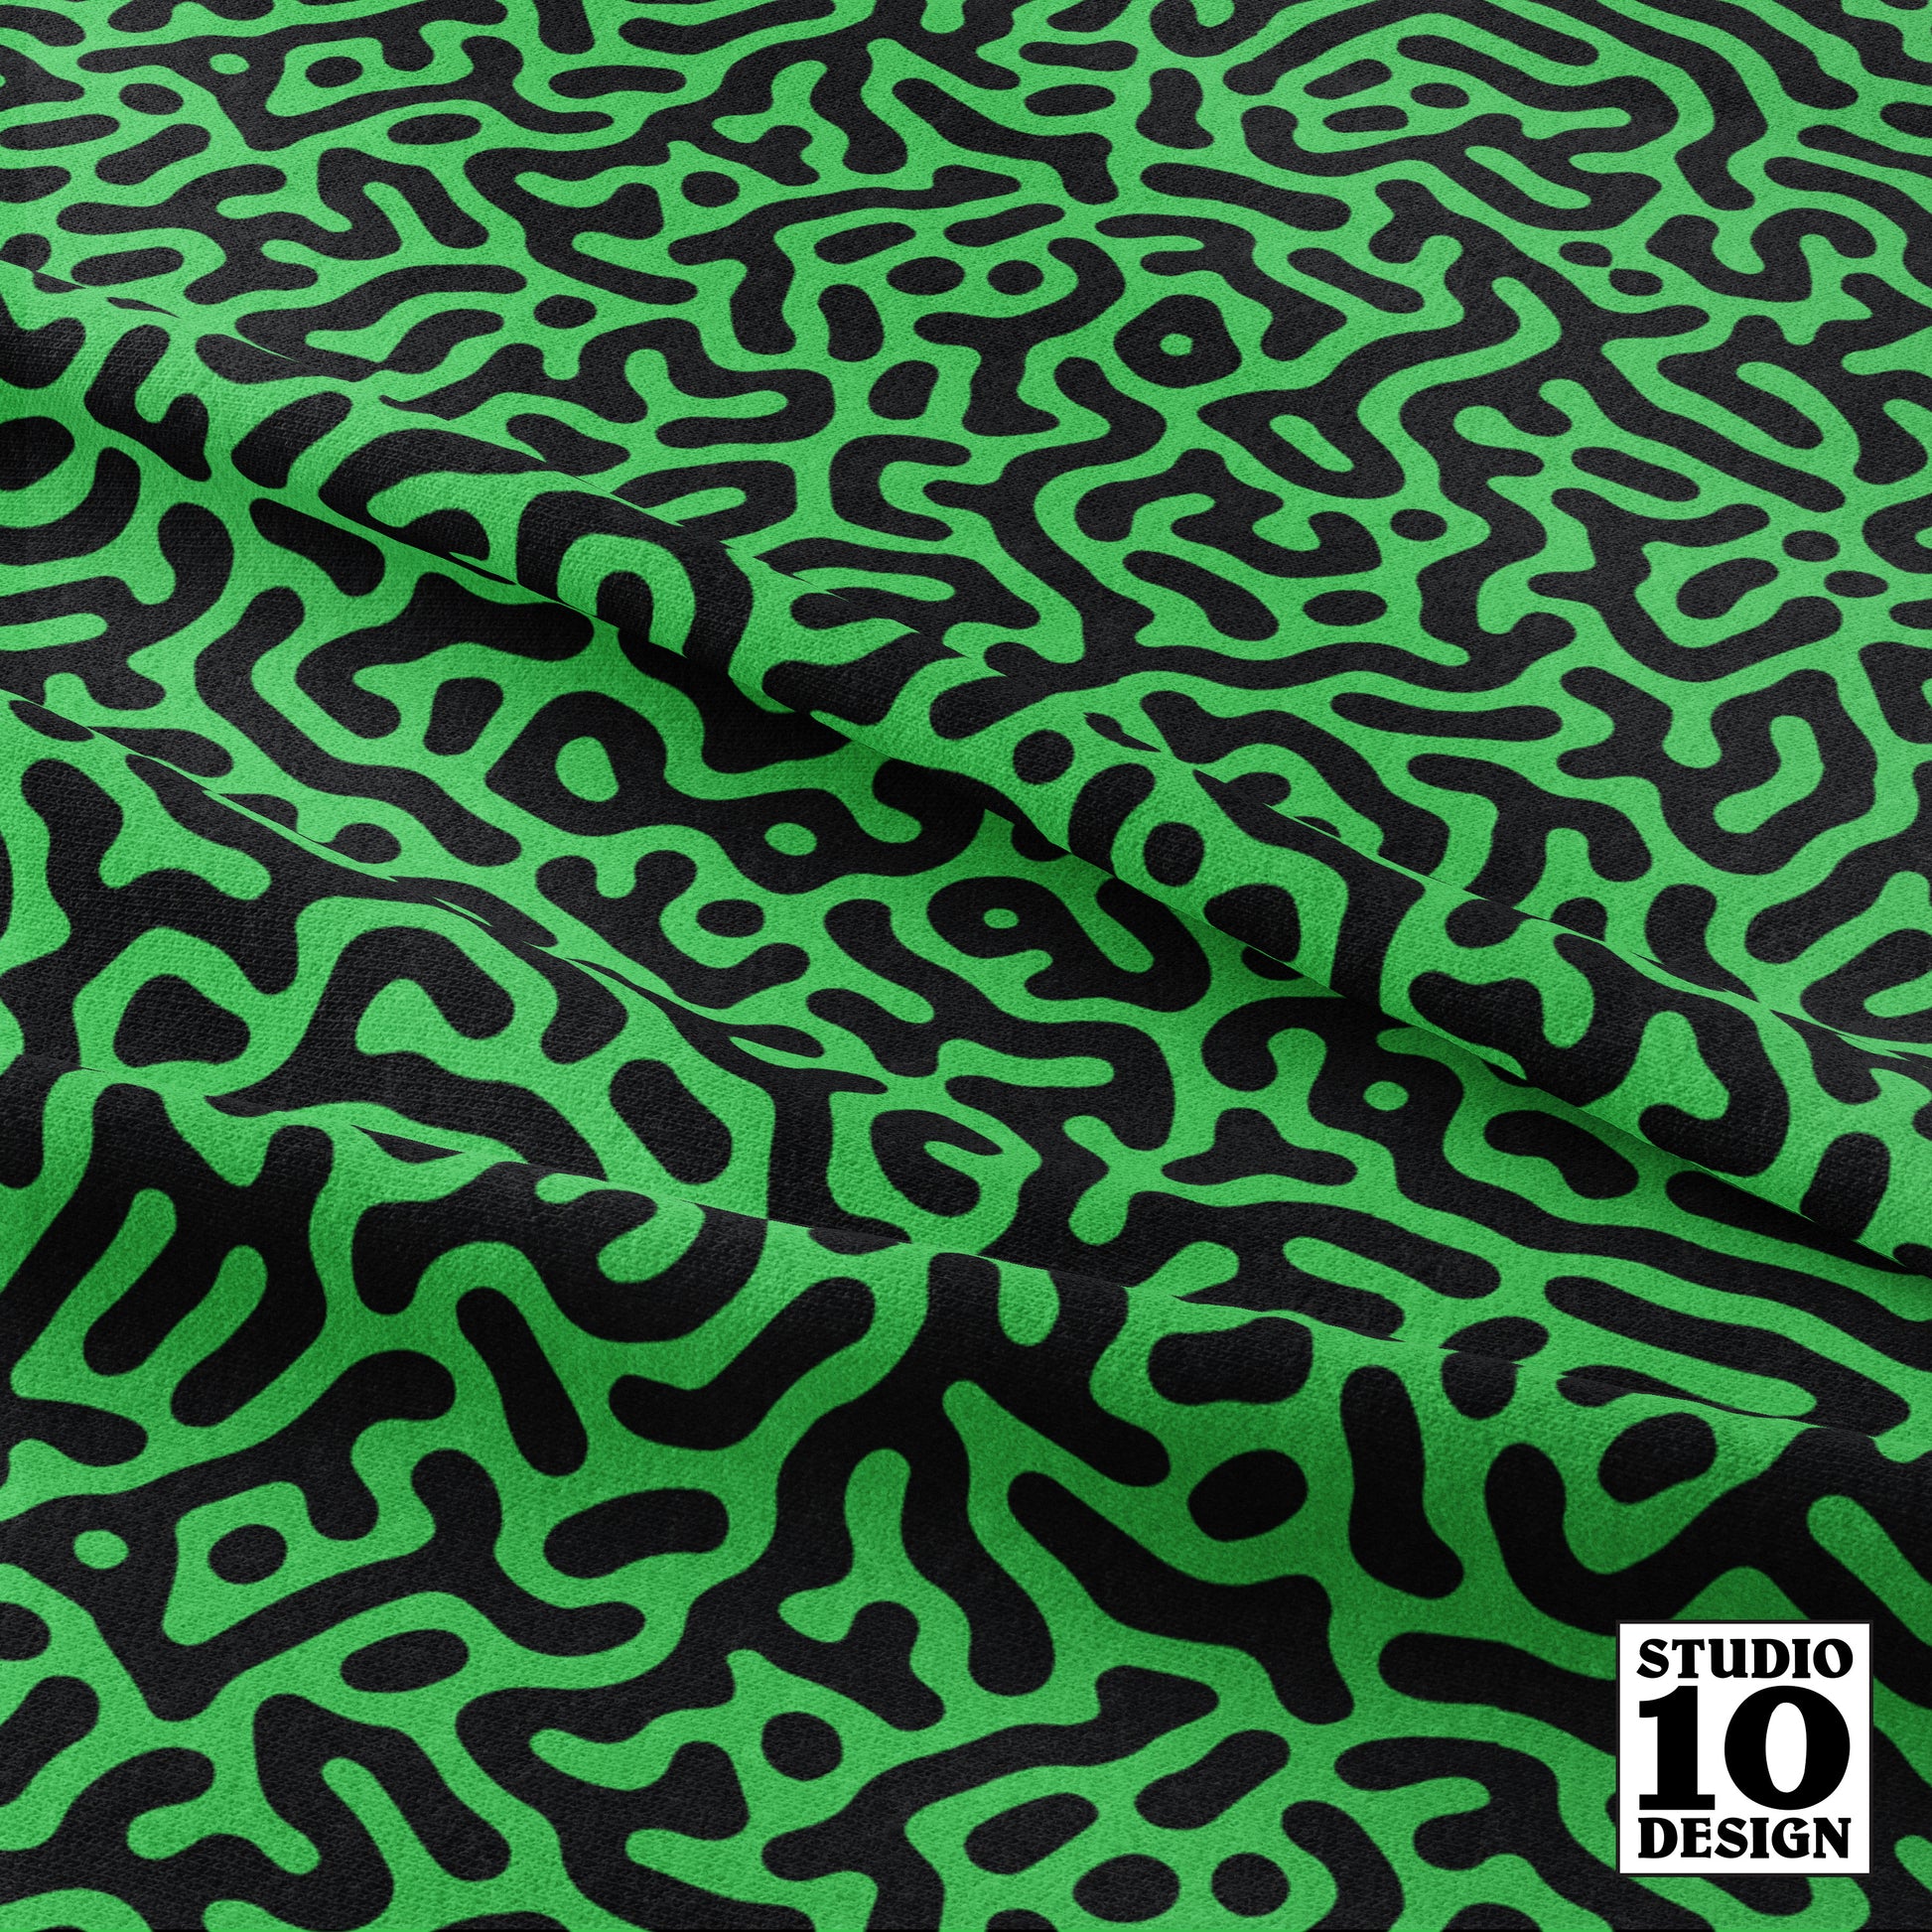 Turing Pattern I: Black + Grass Printed Fabric by Studio Ten Design